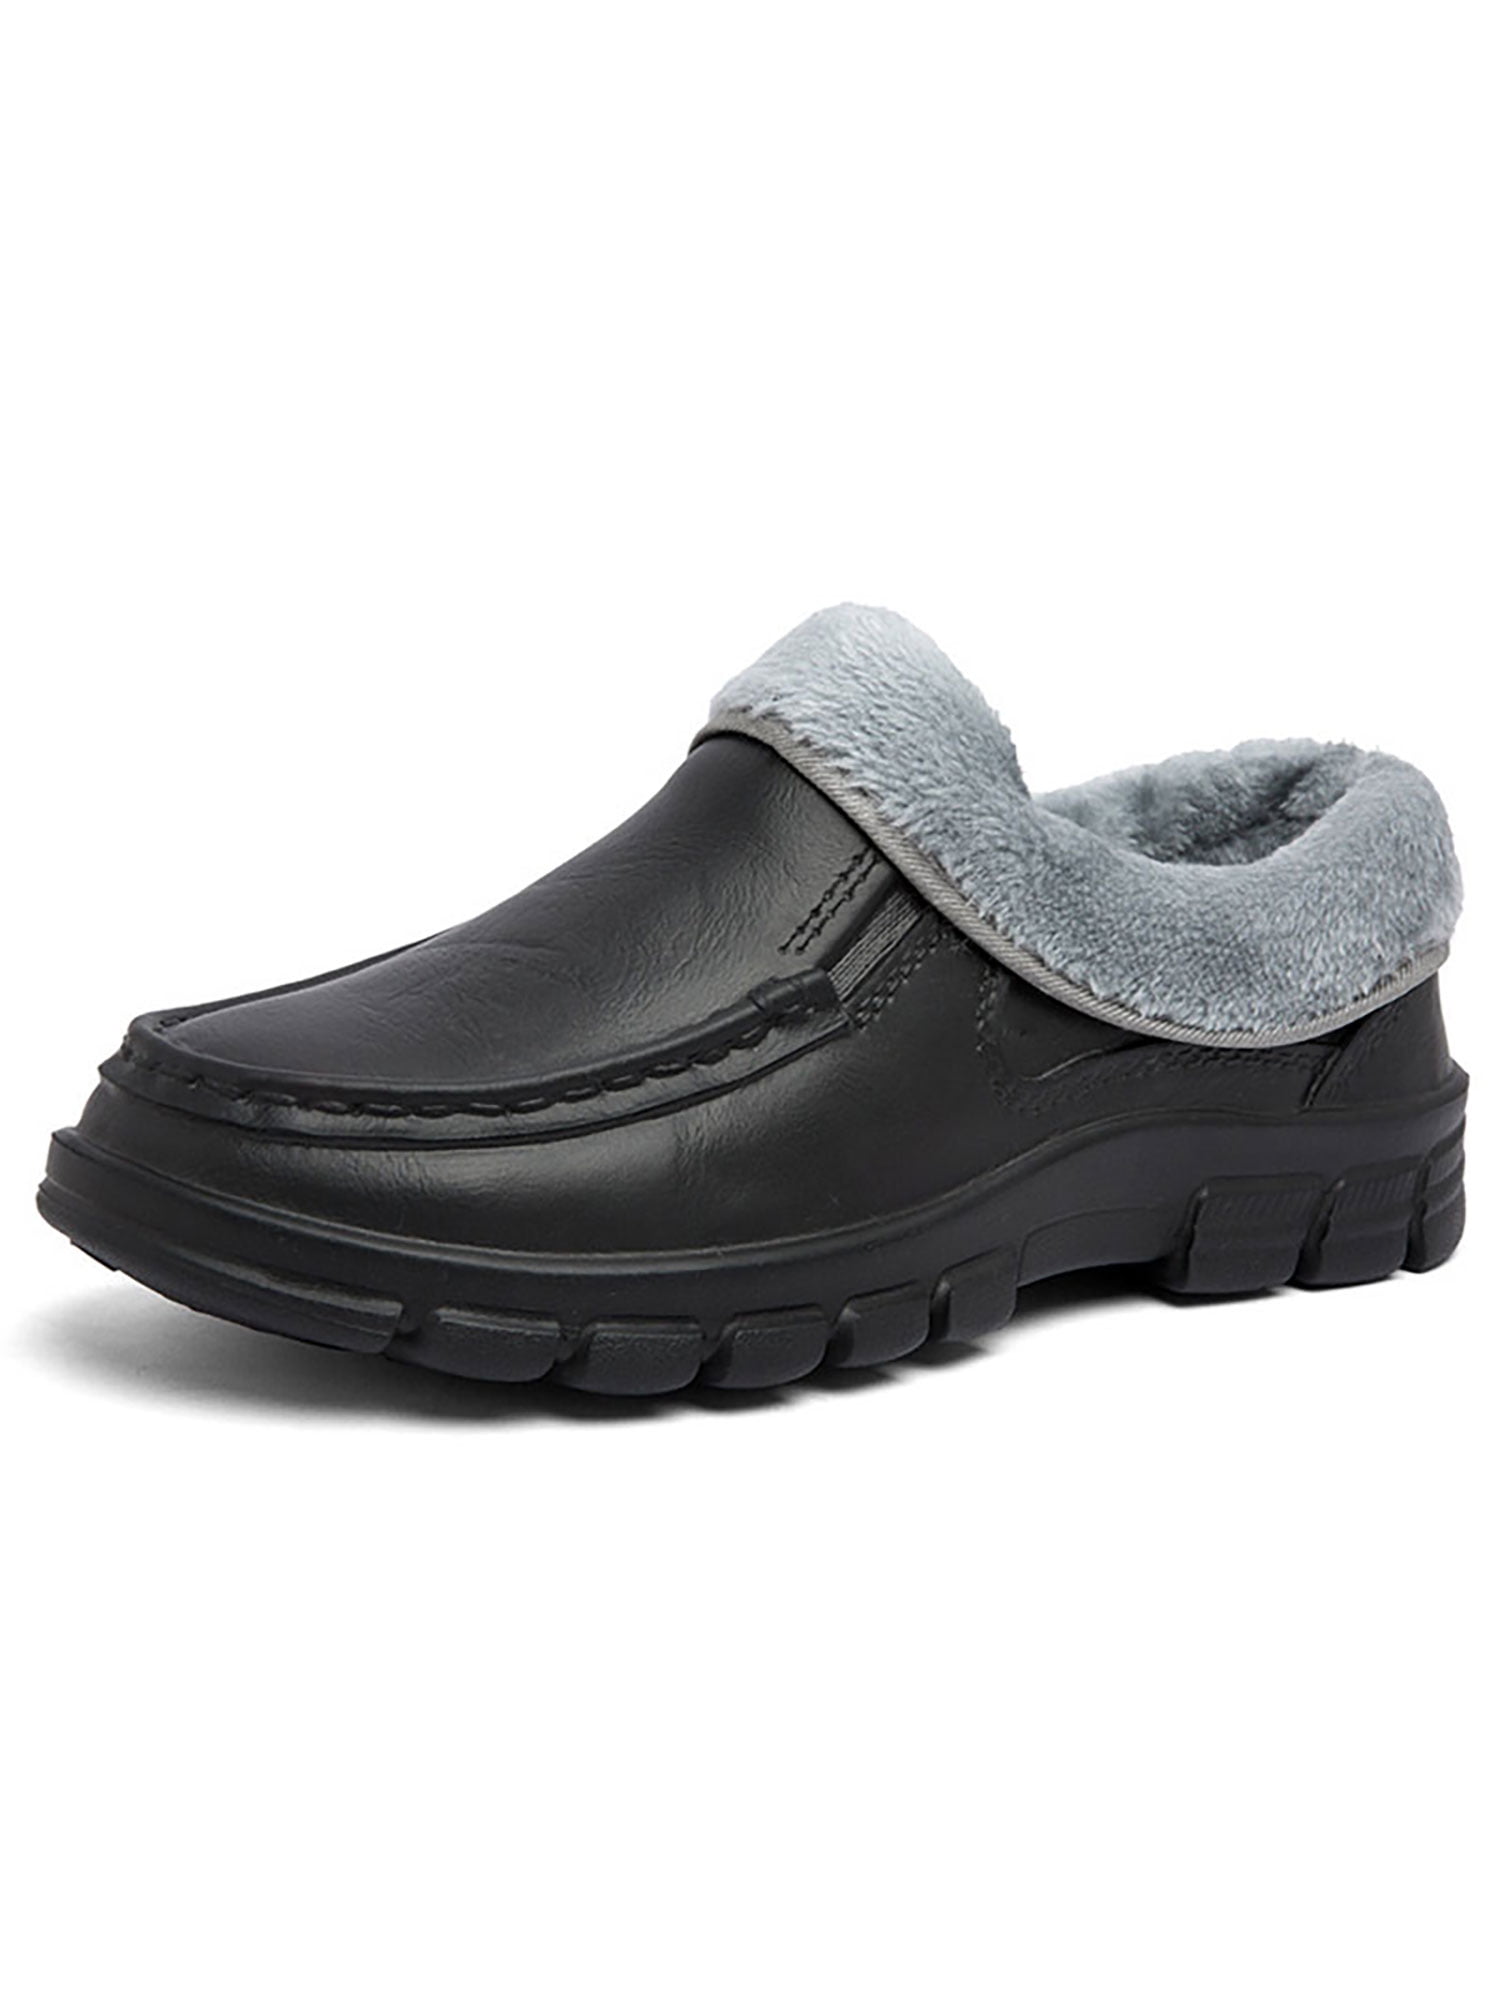 Frontwalk Men's Rubber Boot Slip Resistant Rain Boots Lightweight ...